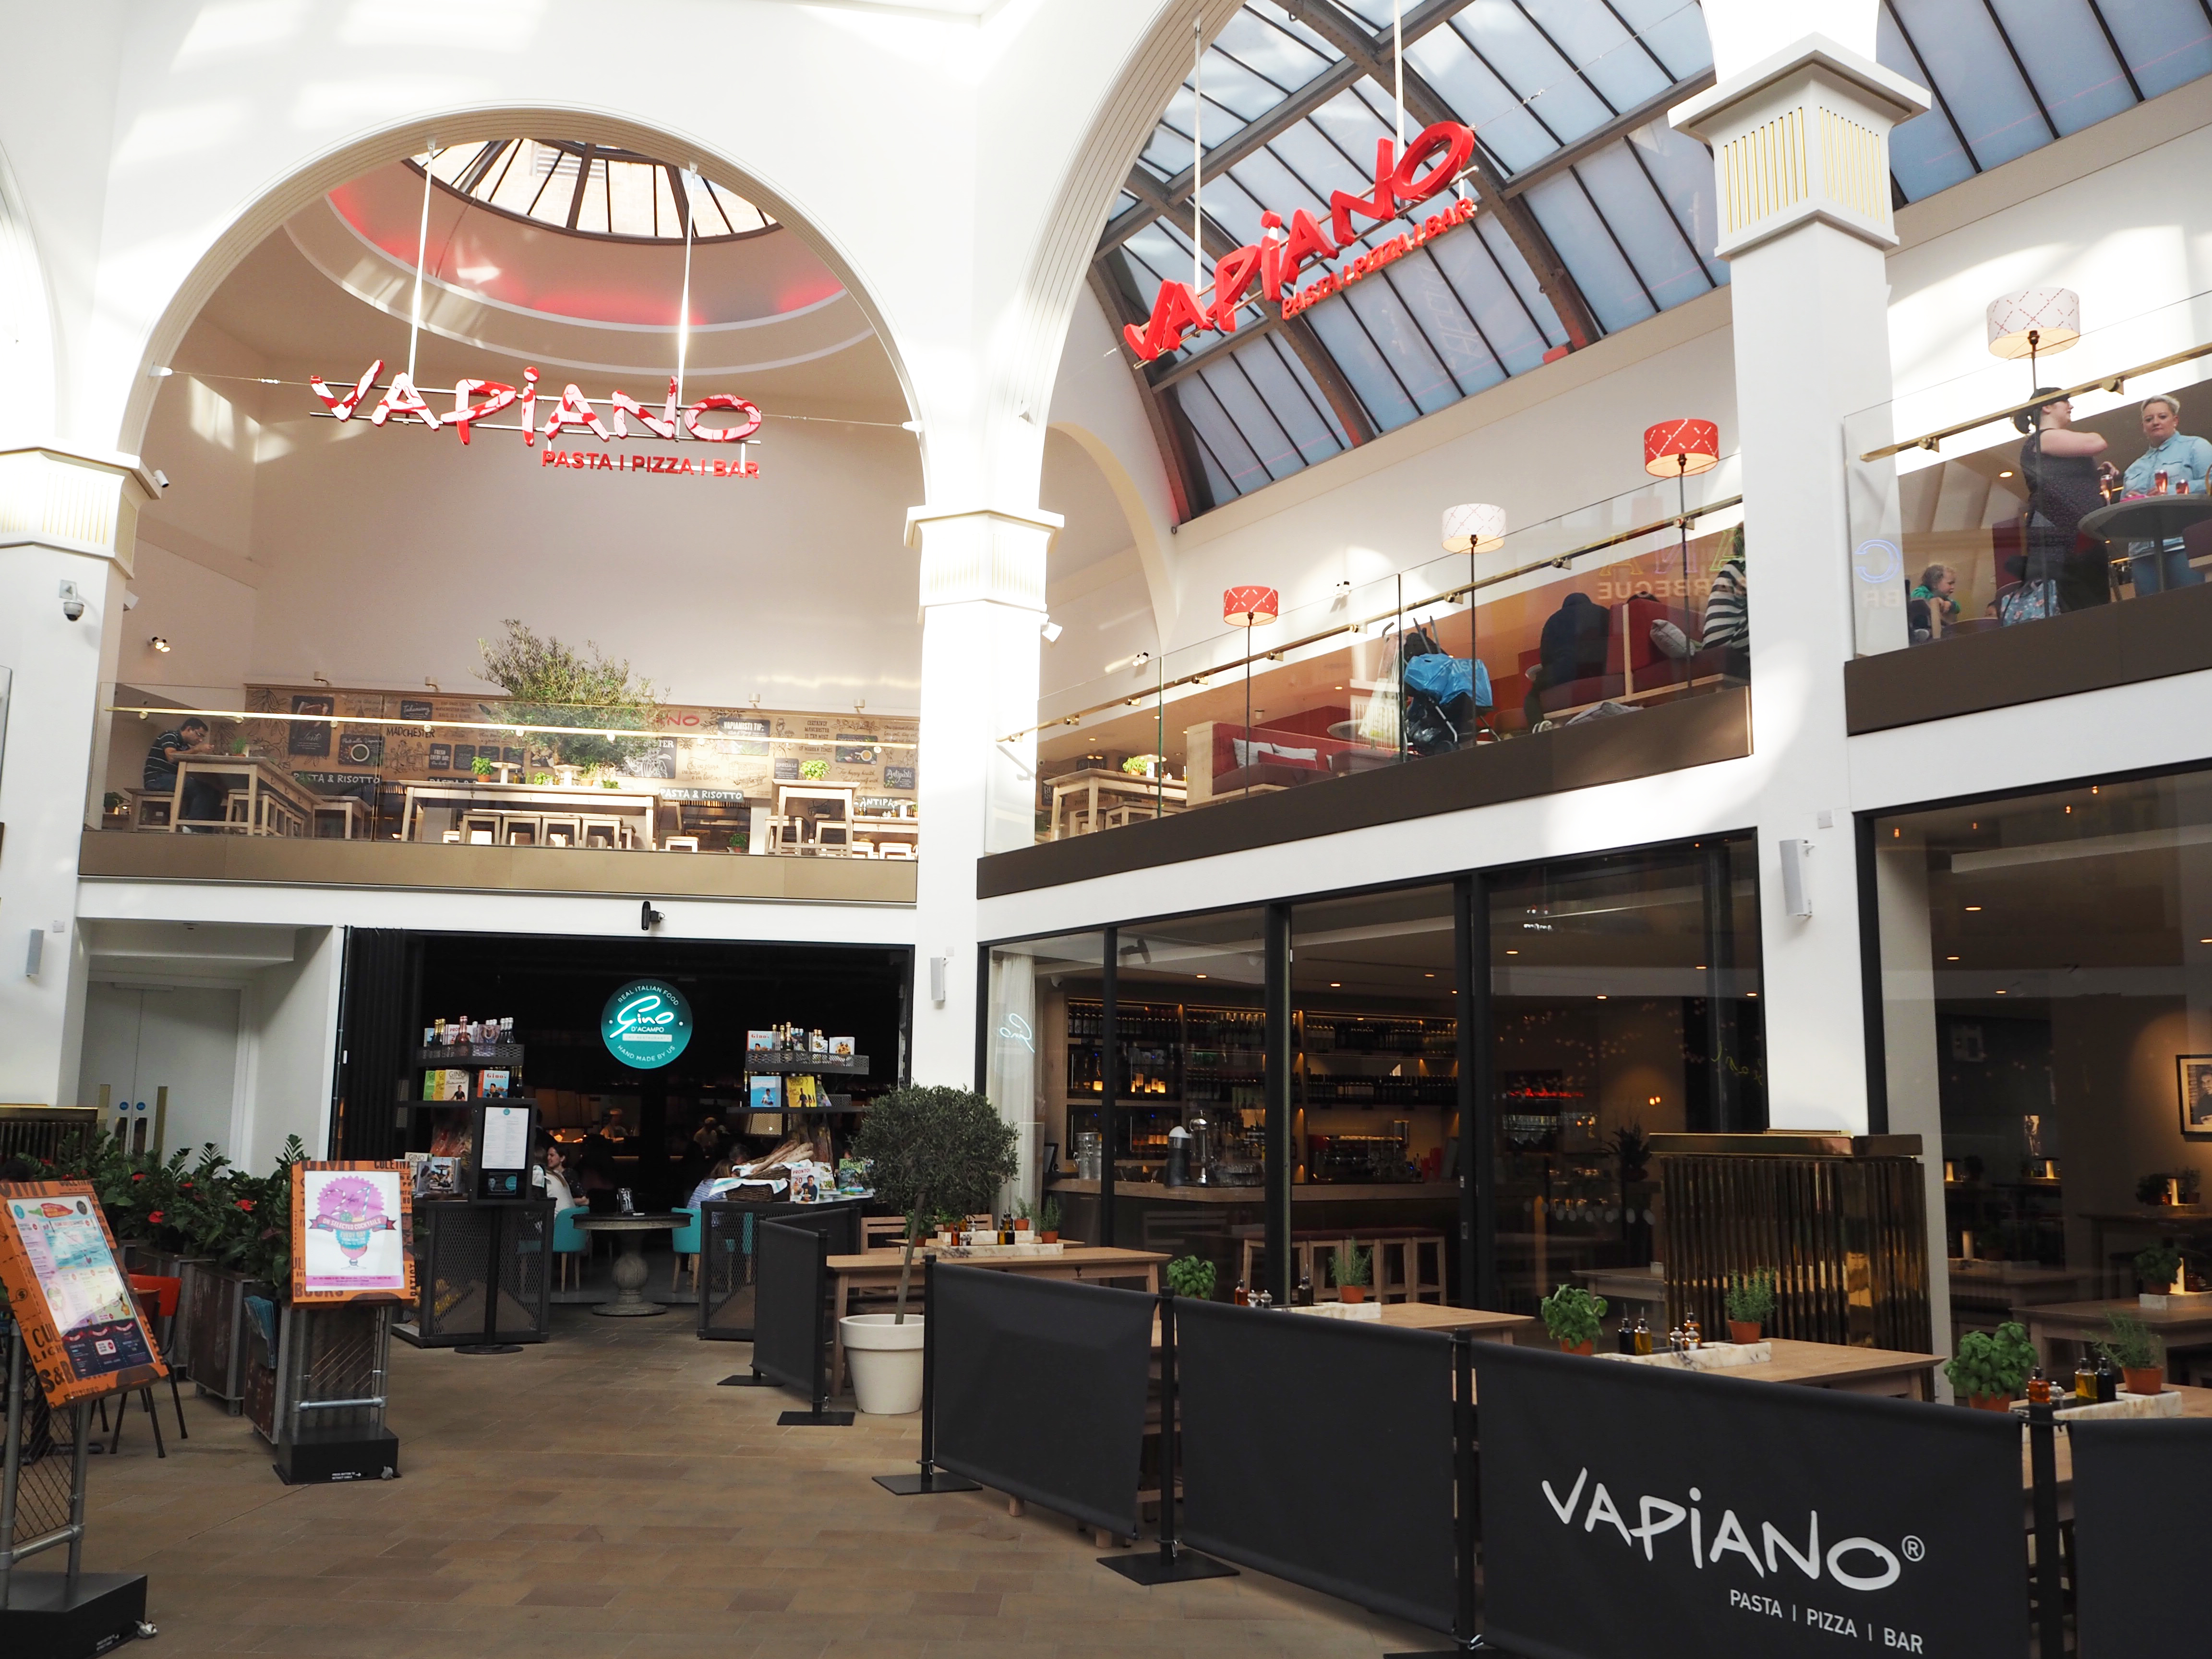 Vapiano UK new cocktail menu launch - Manchester event & review